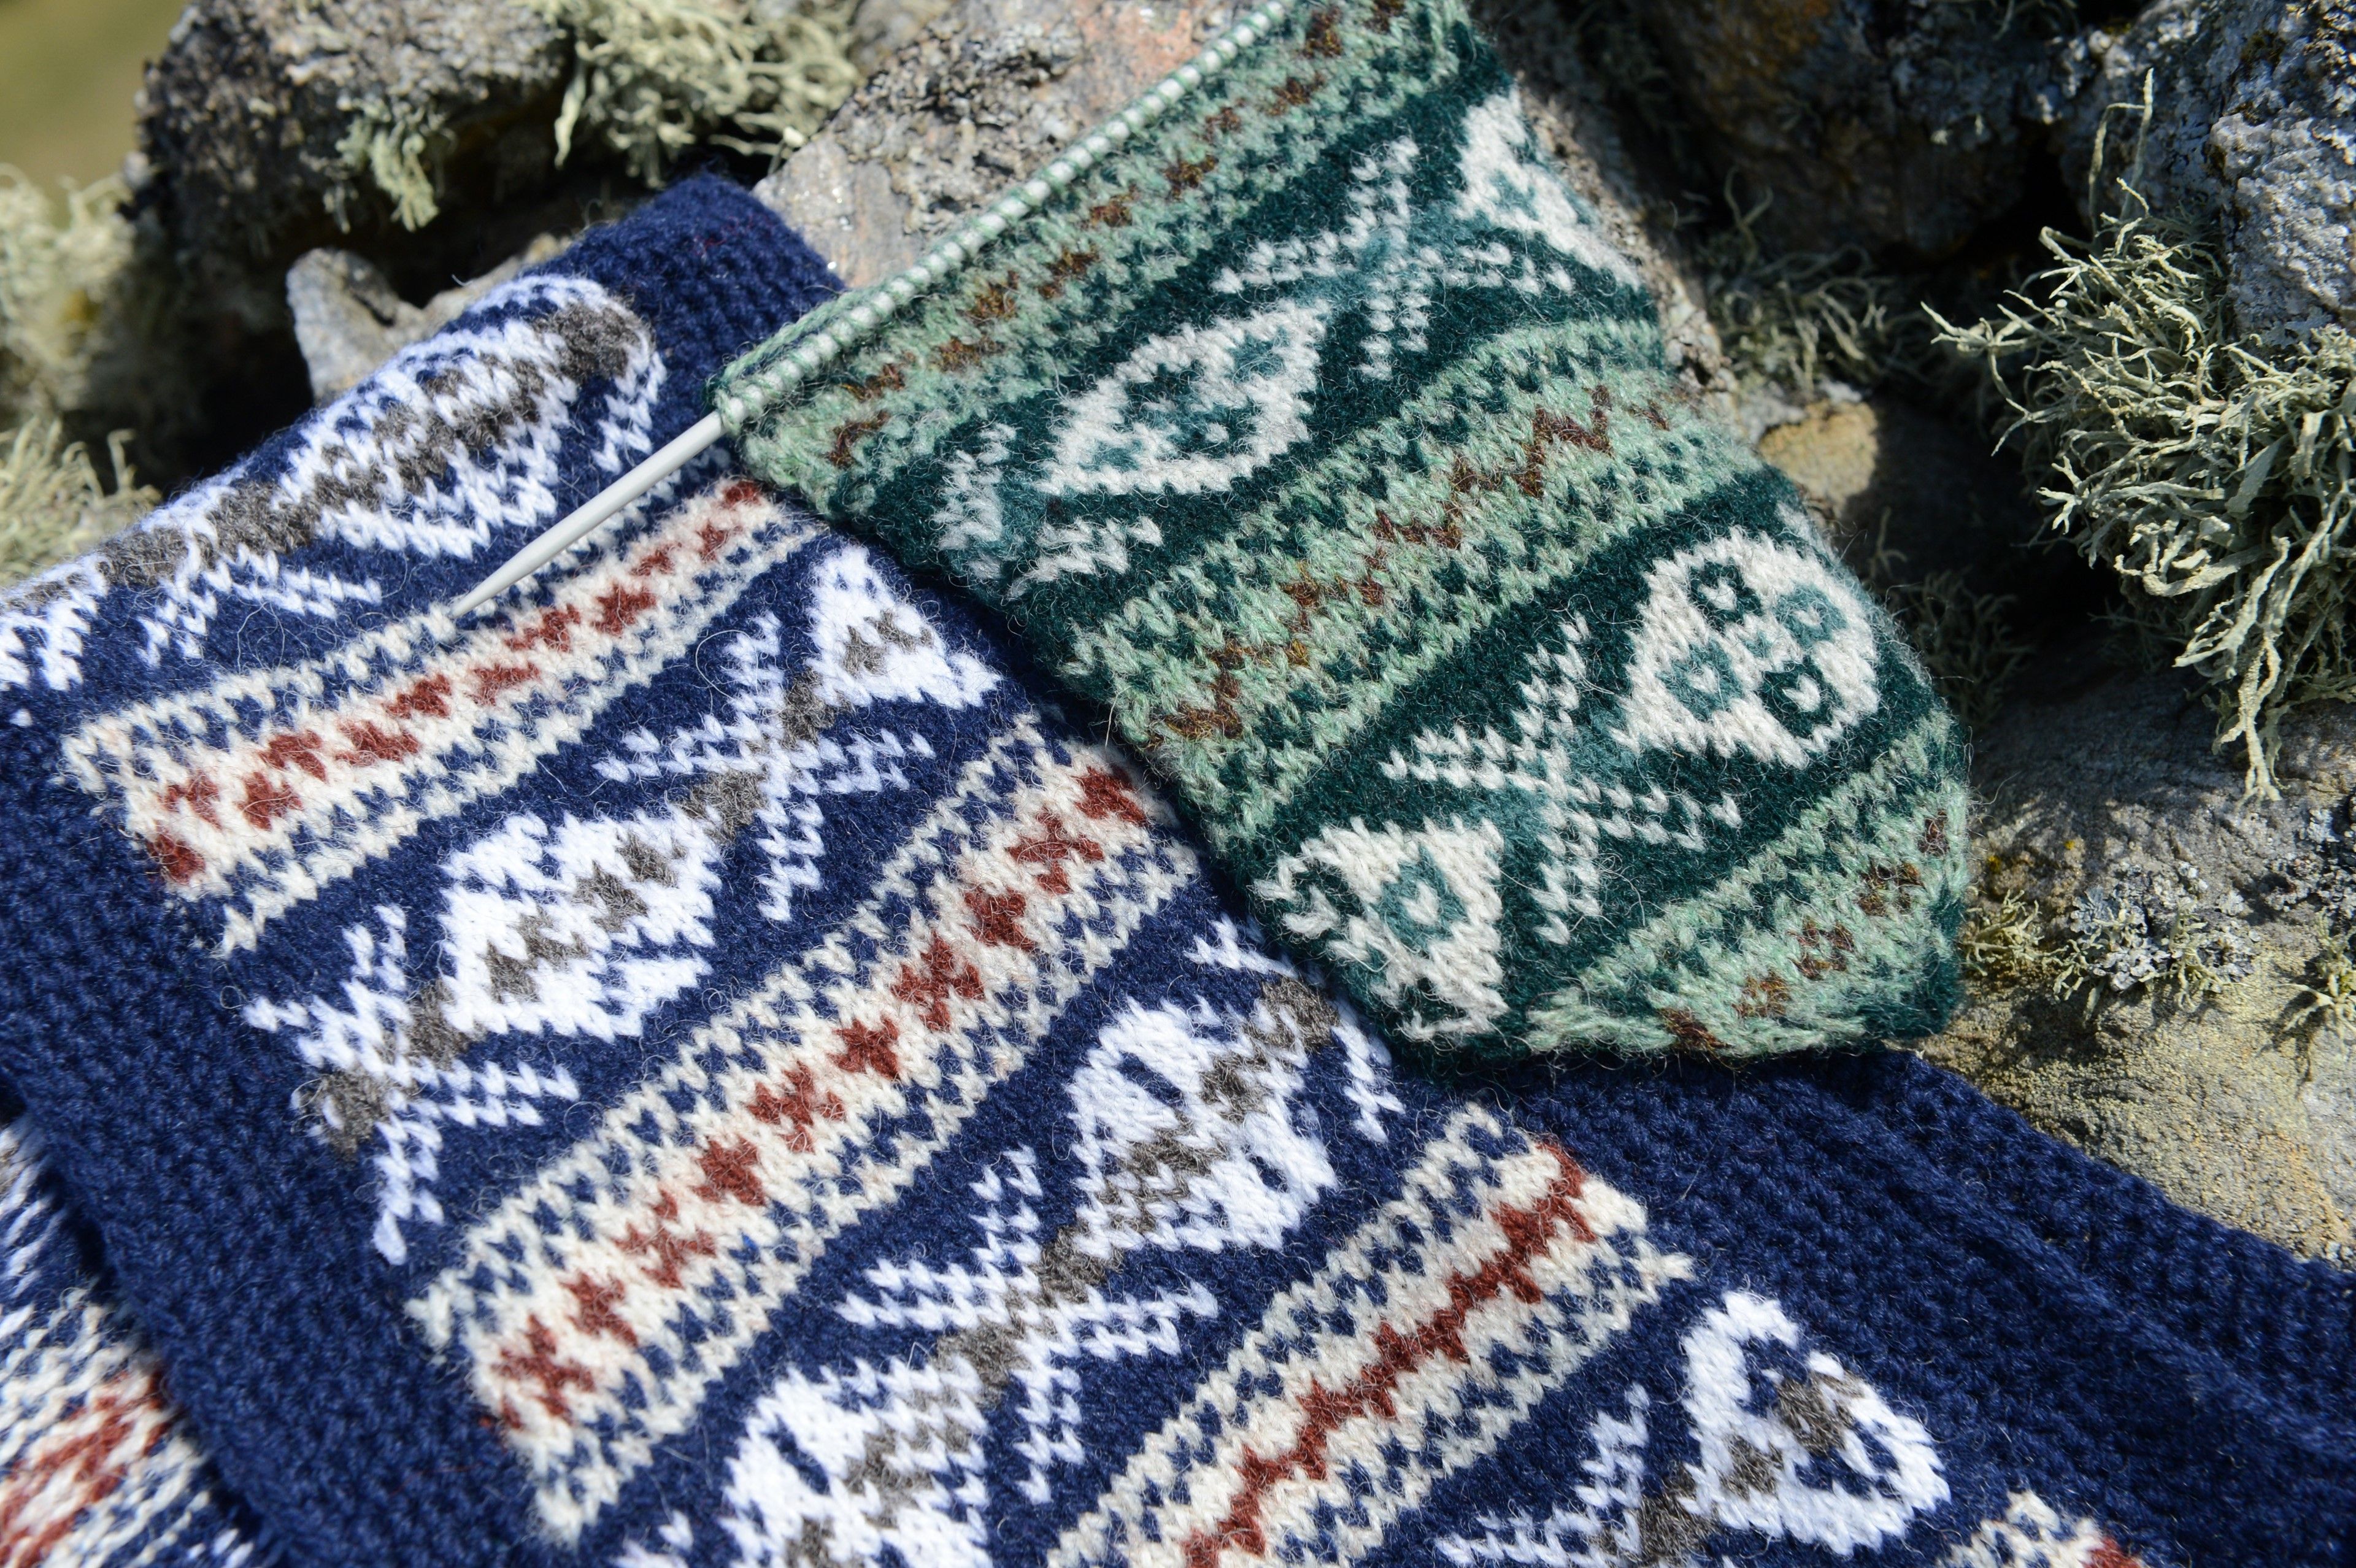 Scotland: Knitting in Shetland